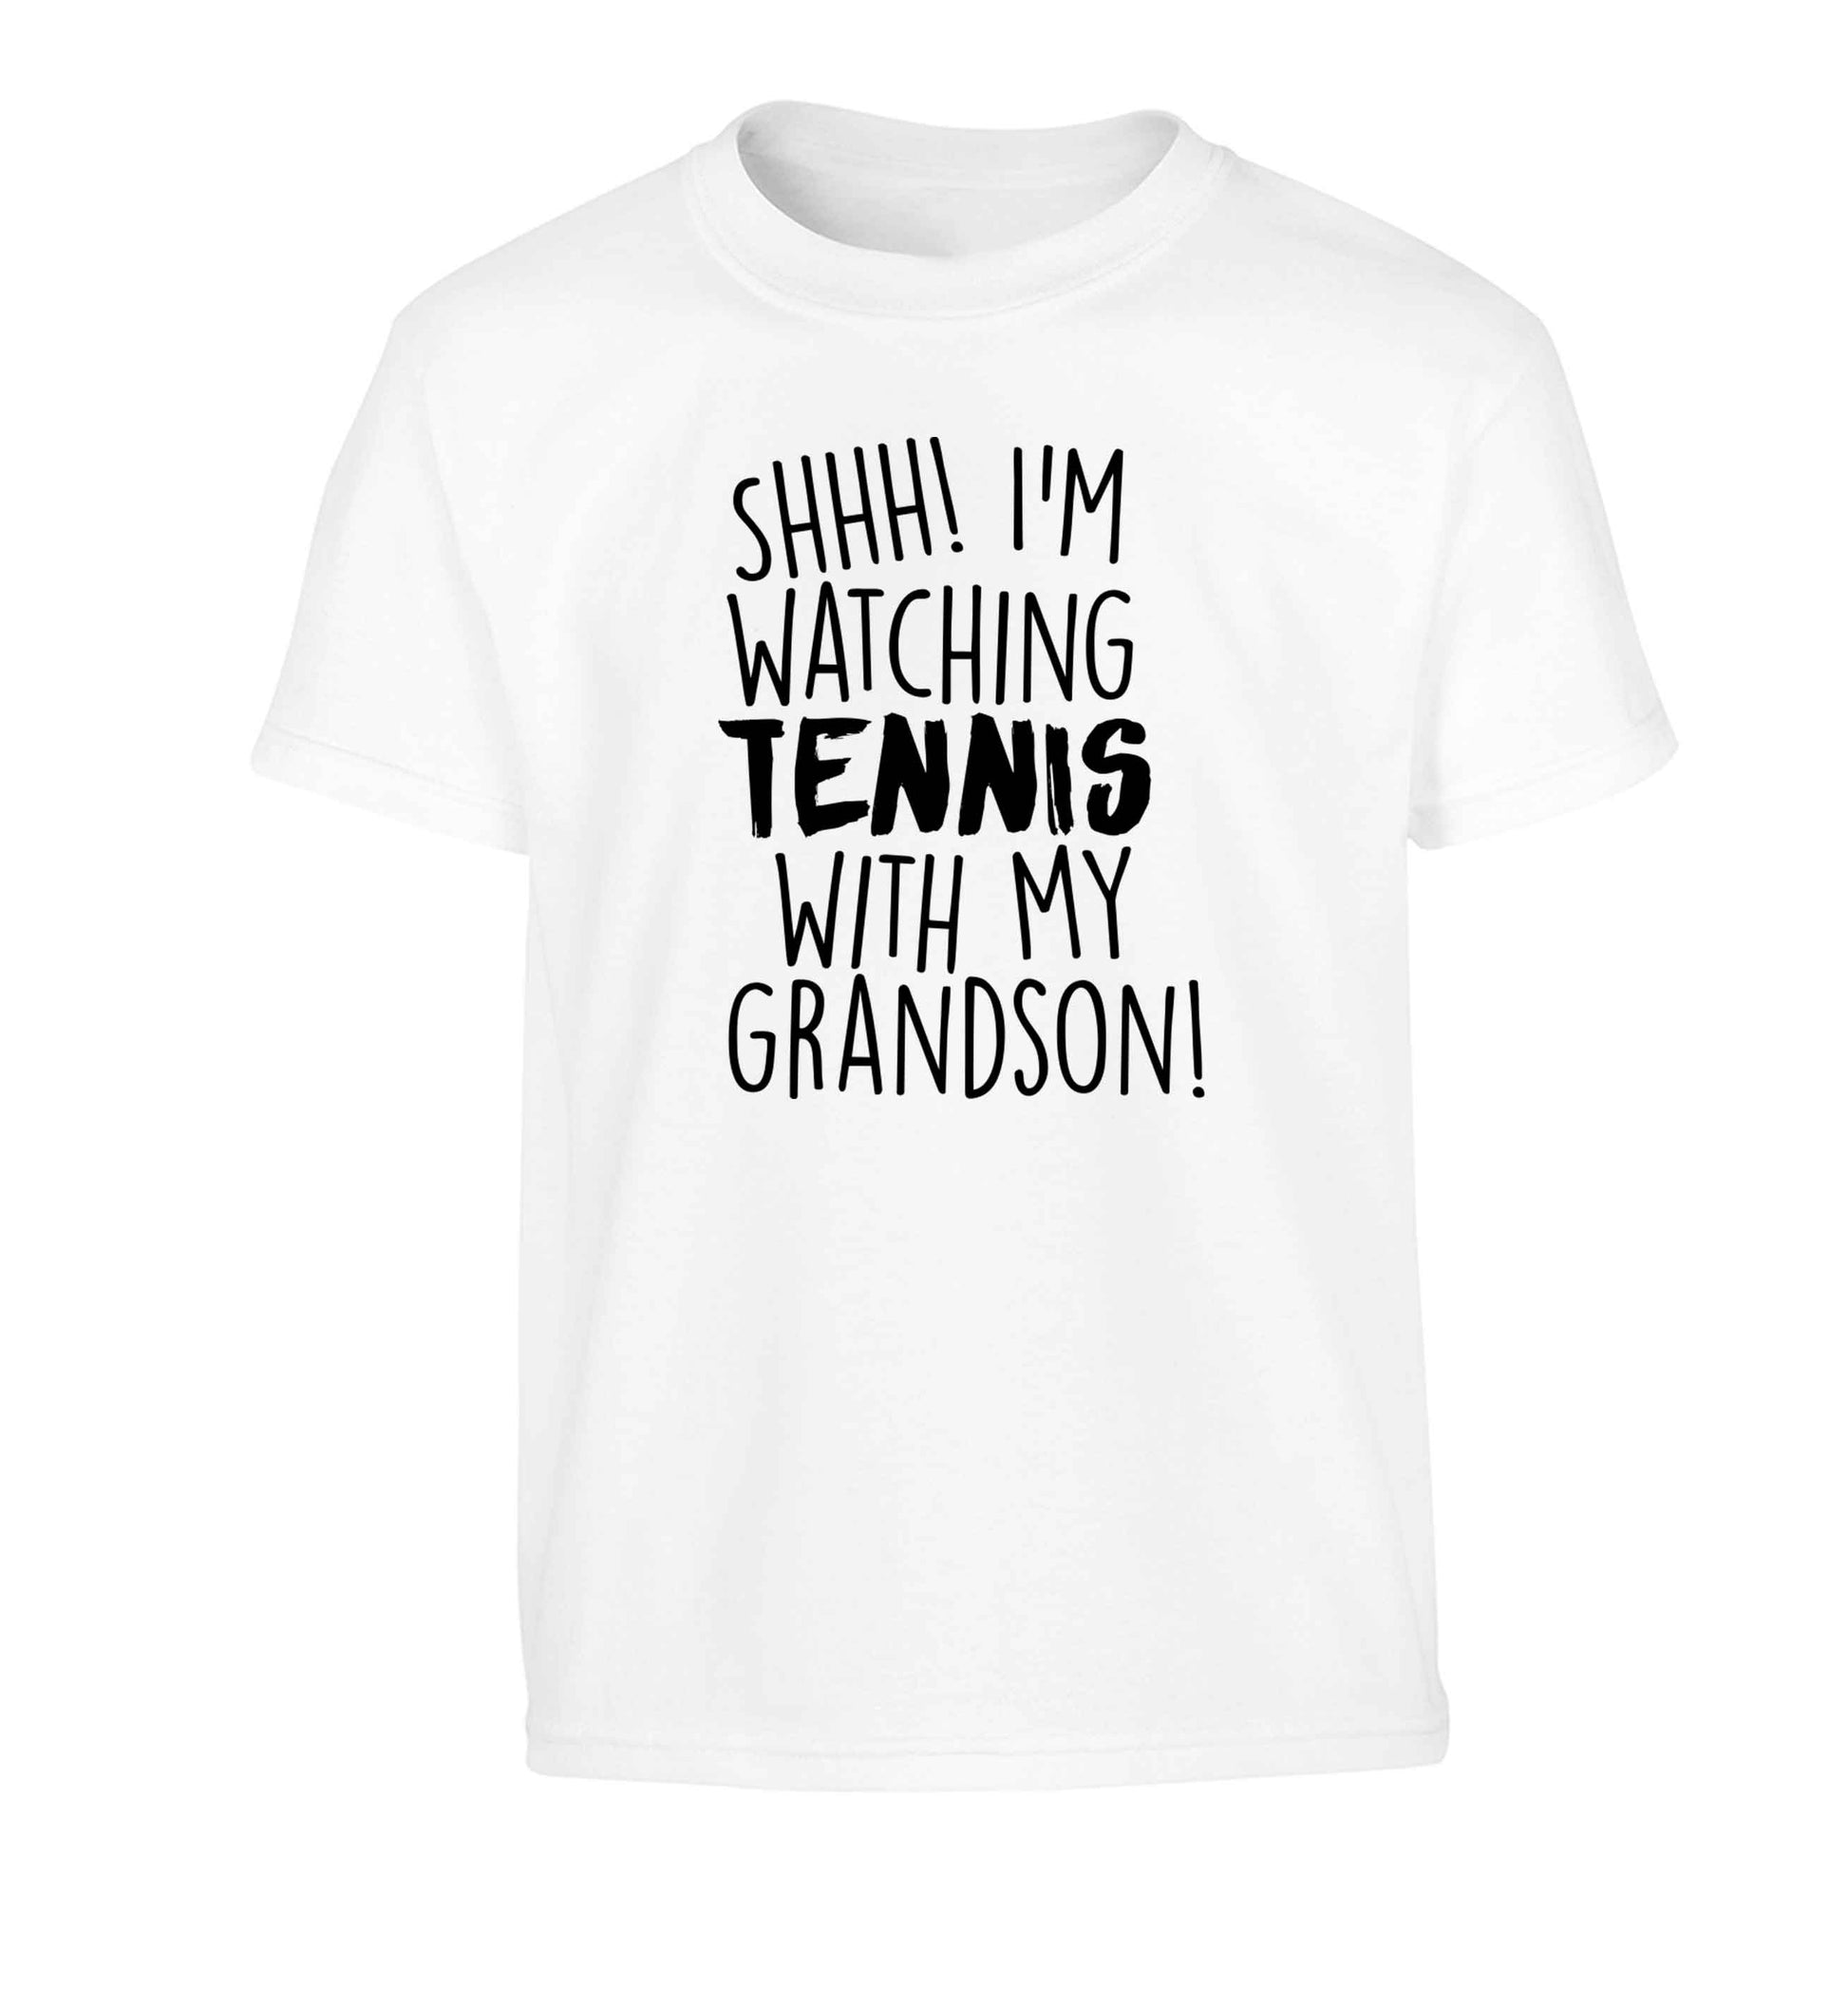 Shh! I'm watching tennis with my grandson! Children's white Tshirt 12-13 Years